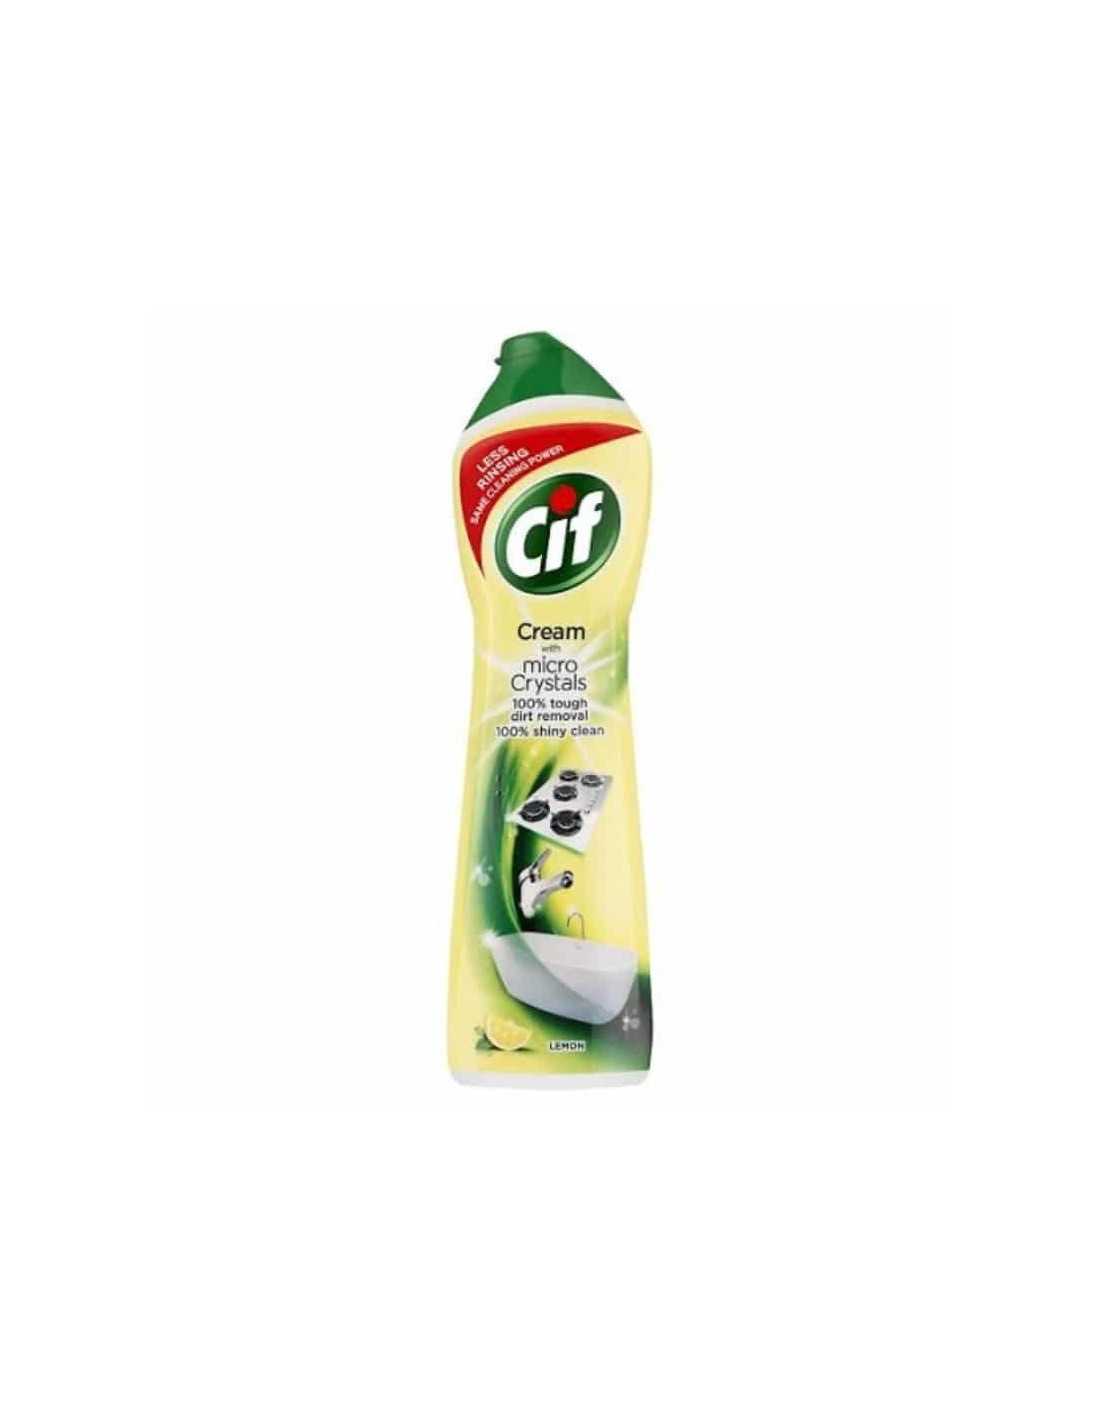 Smac Brilla Acciaio Detergente Crema Per Superfici ml. 500